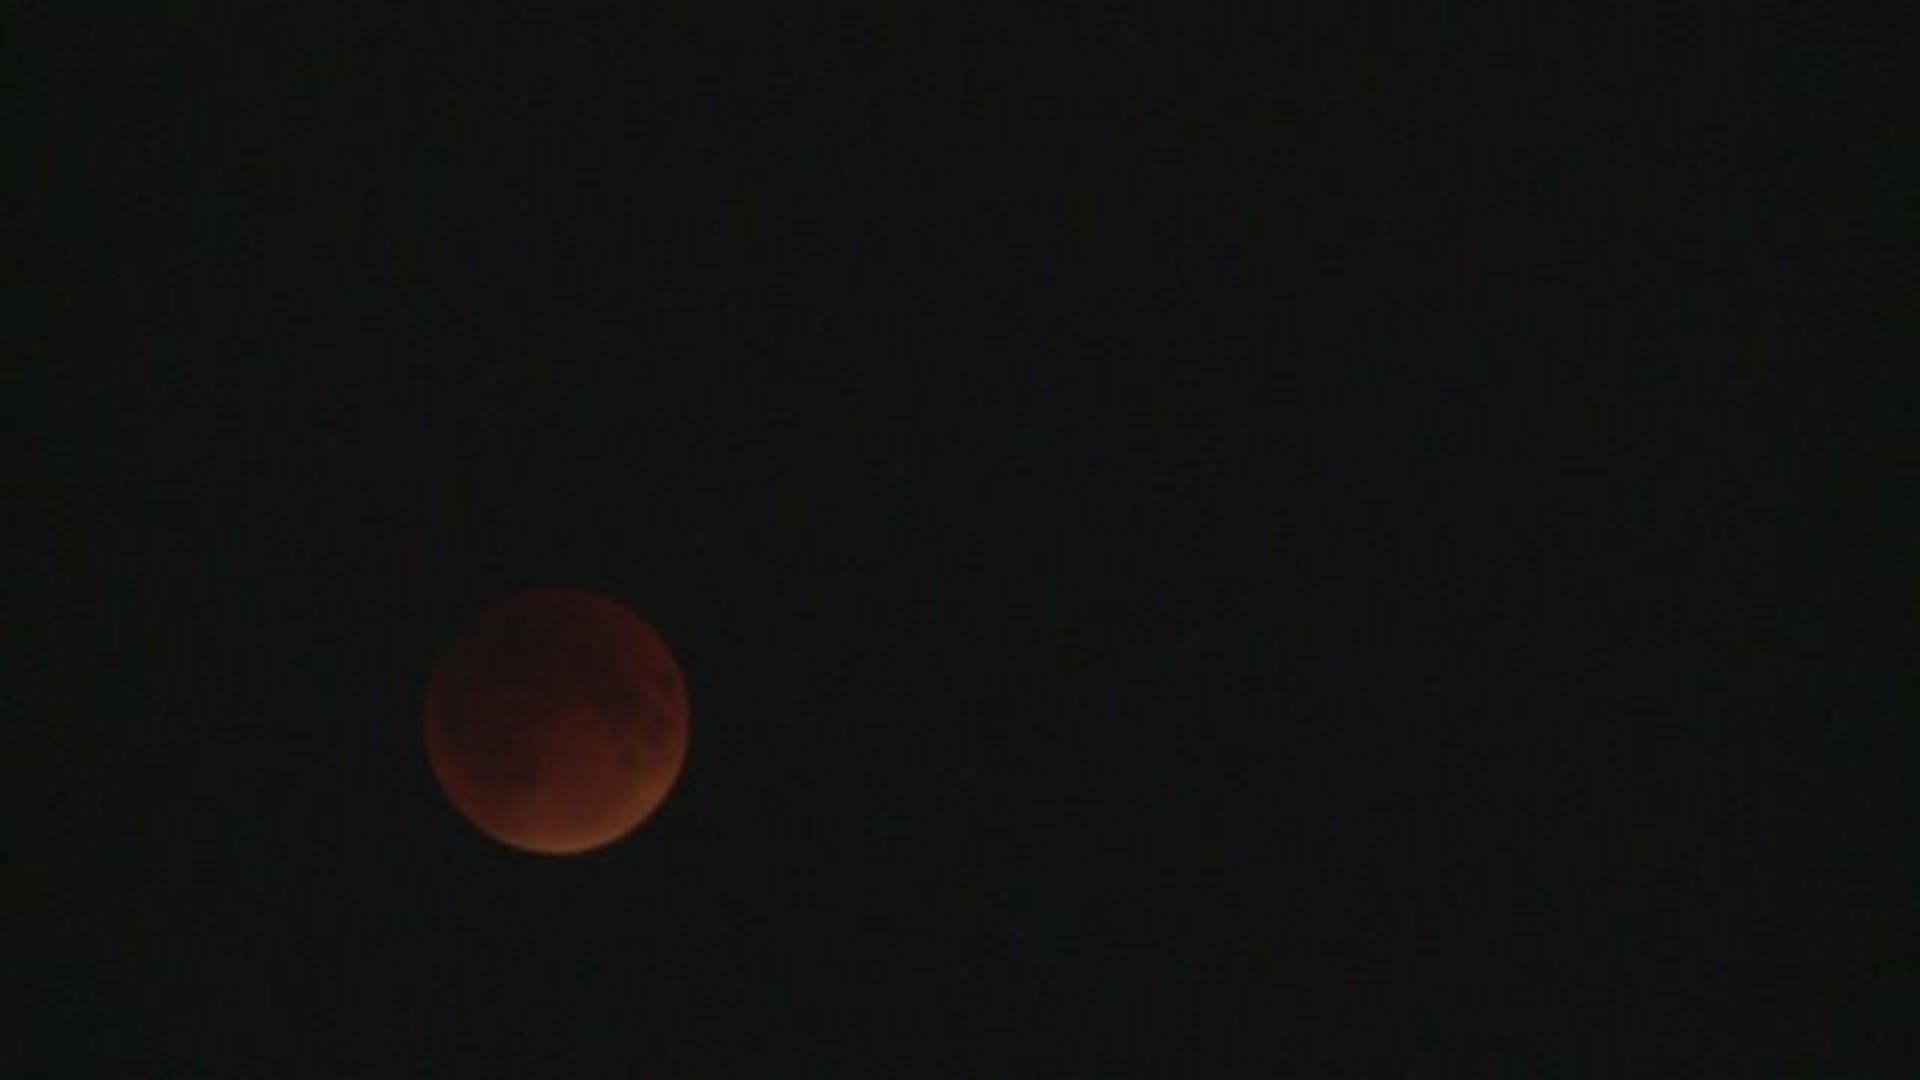 Super Blood Moon eclipse time lapse